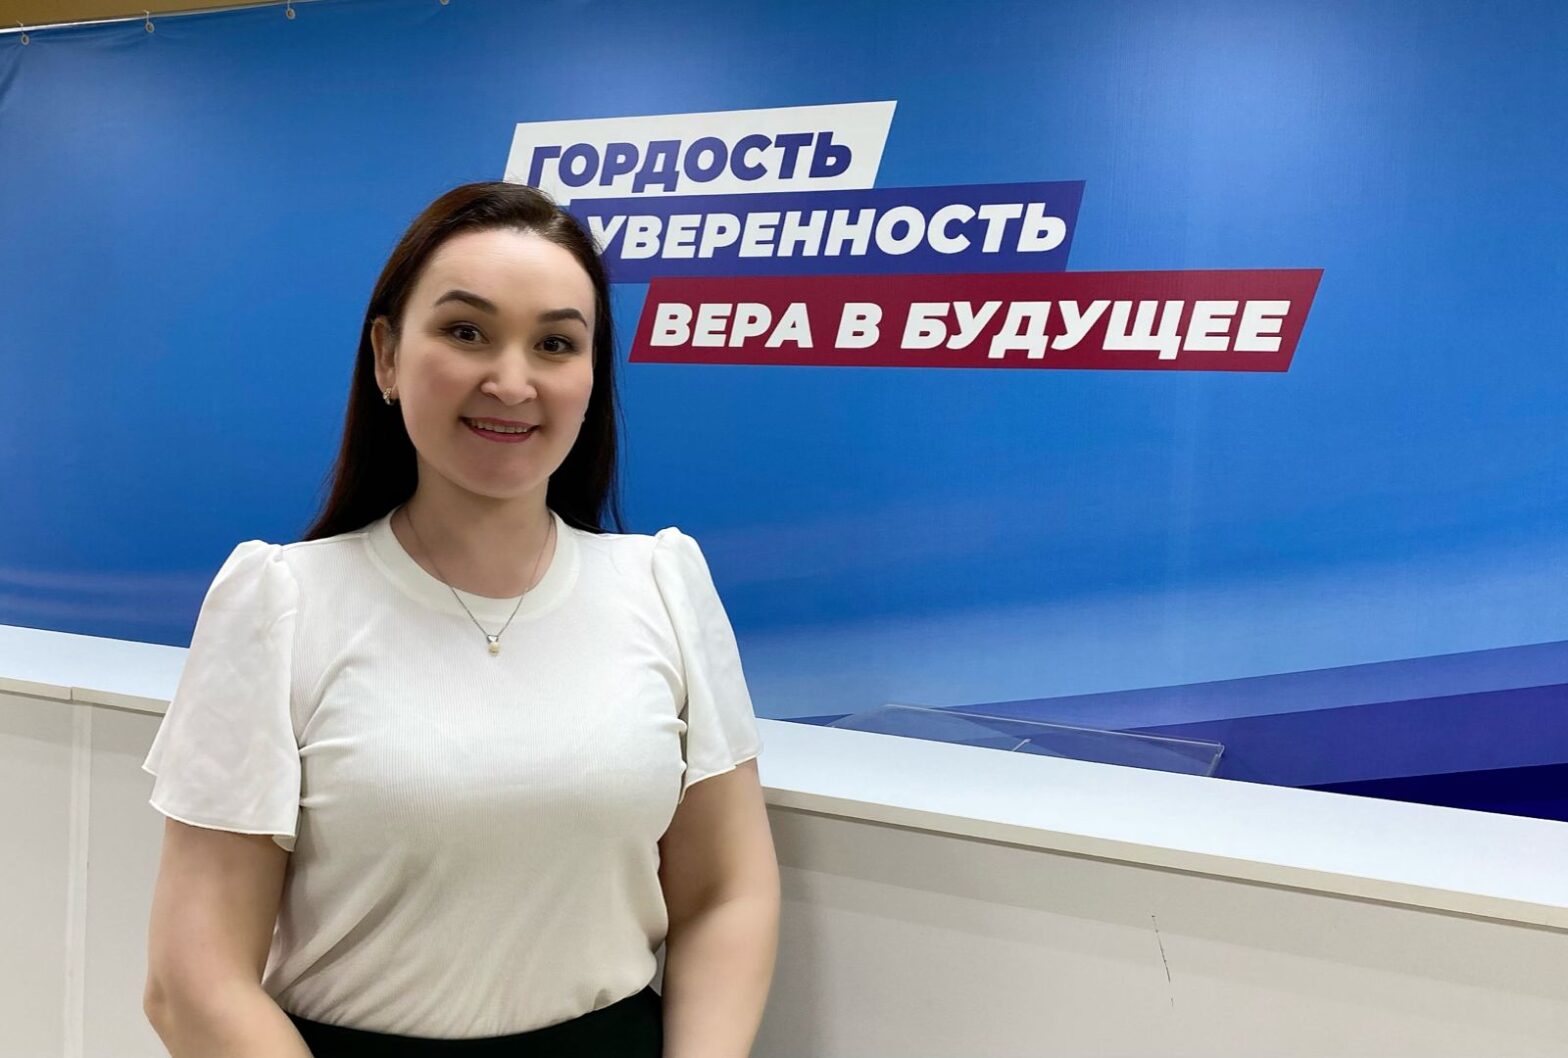 Ирина Бурцева: Особенно важны для Якутии слова президента о народосбережении